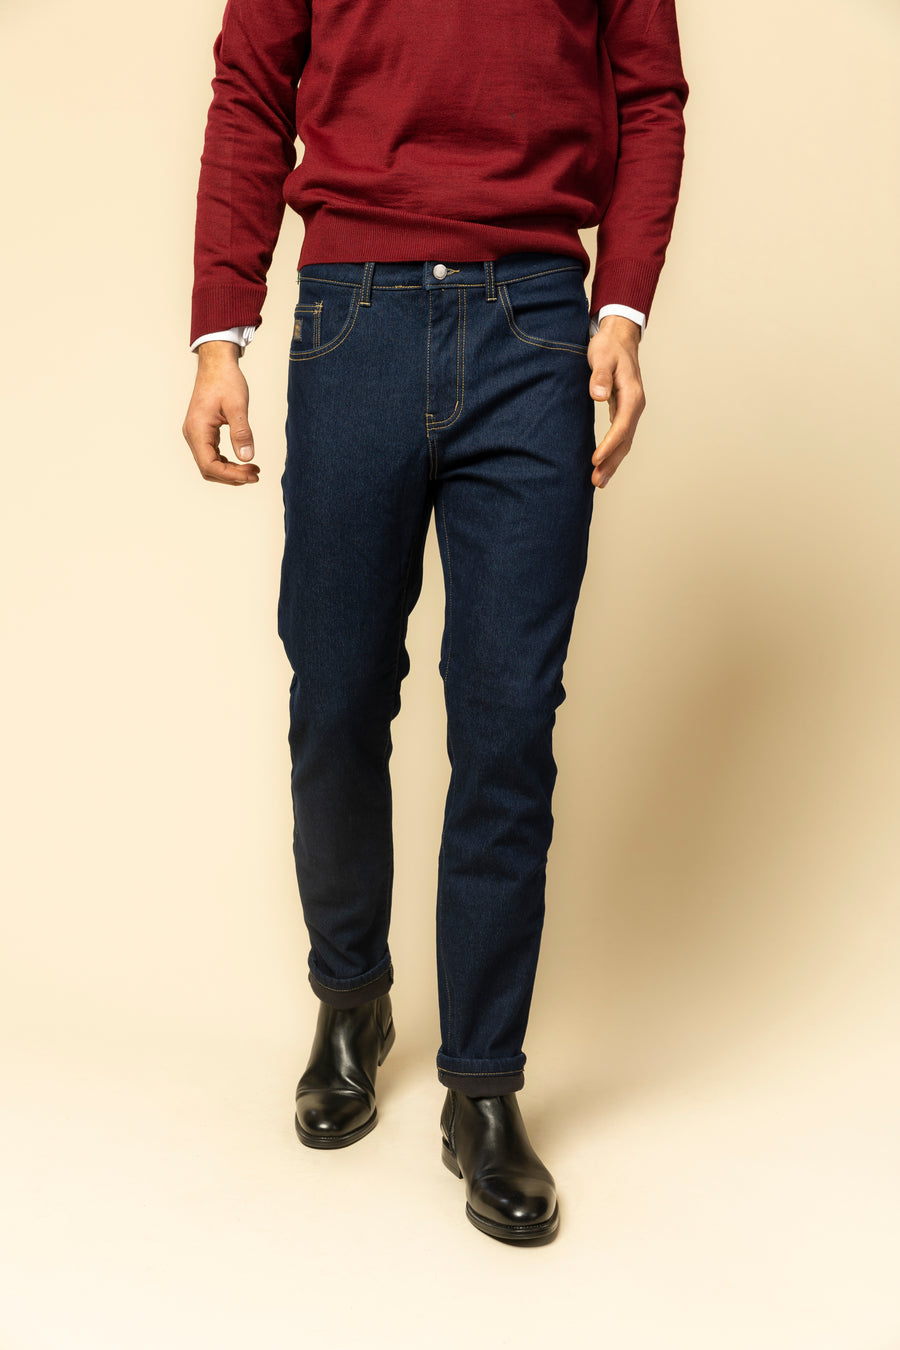 Jeans model clasic